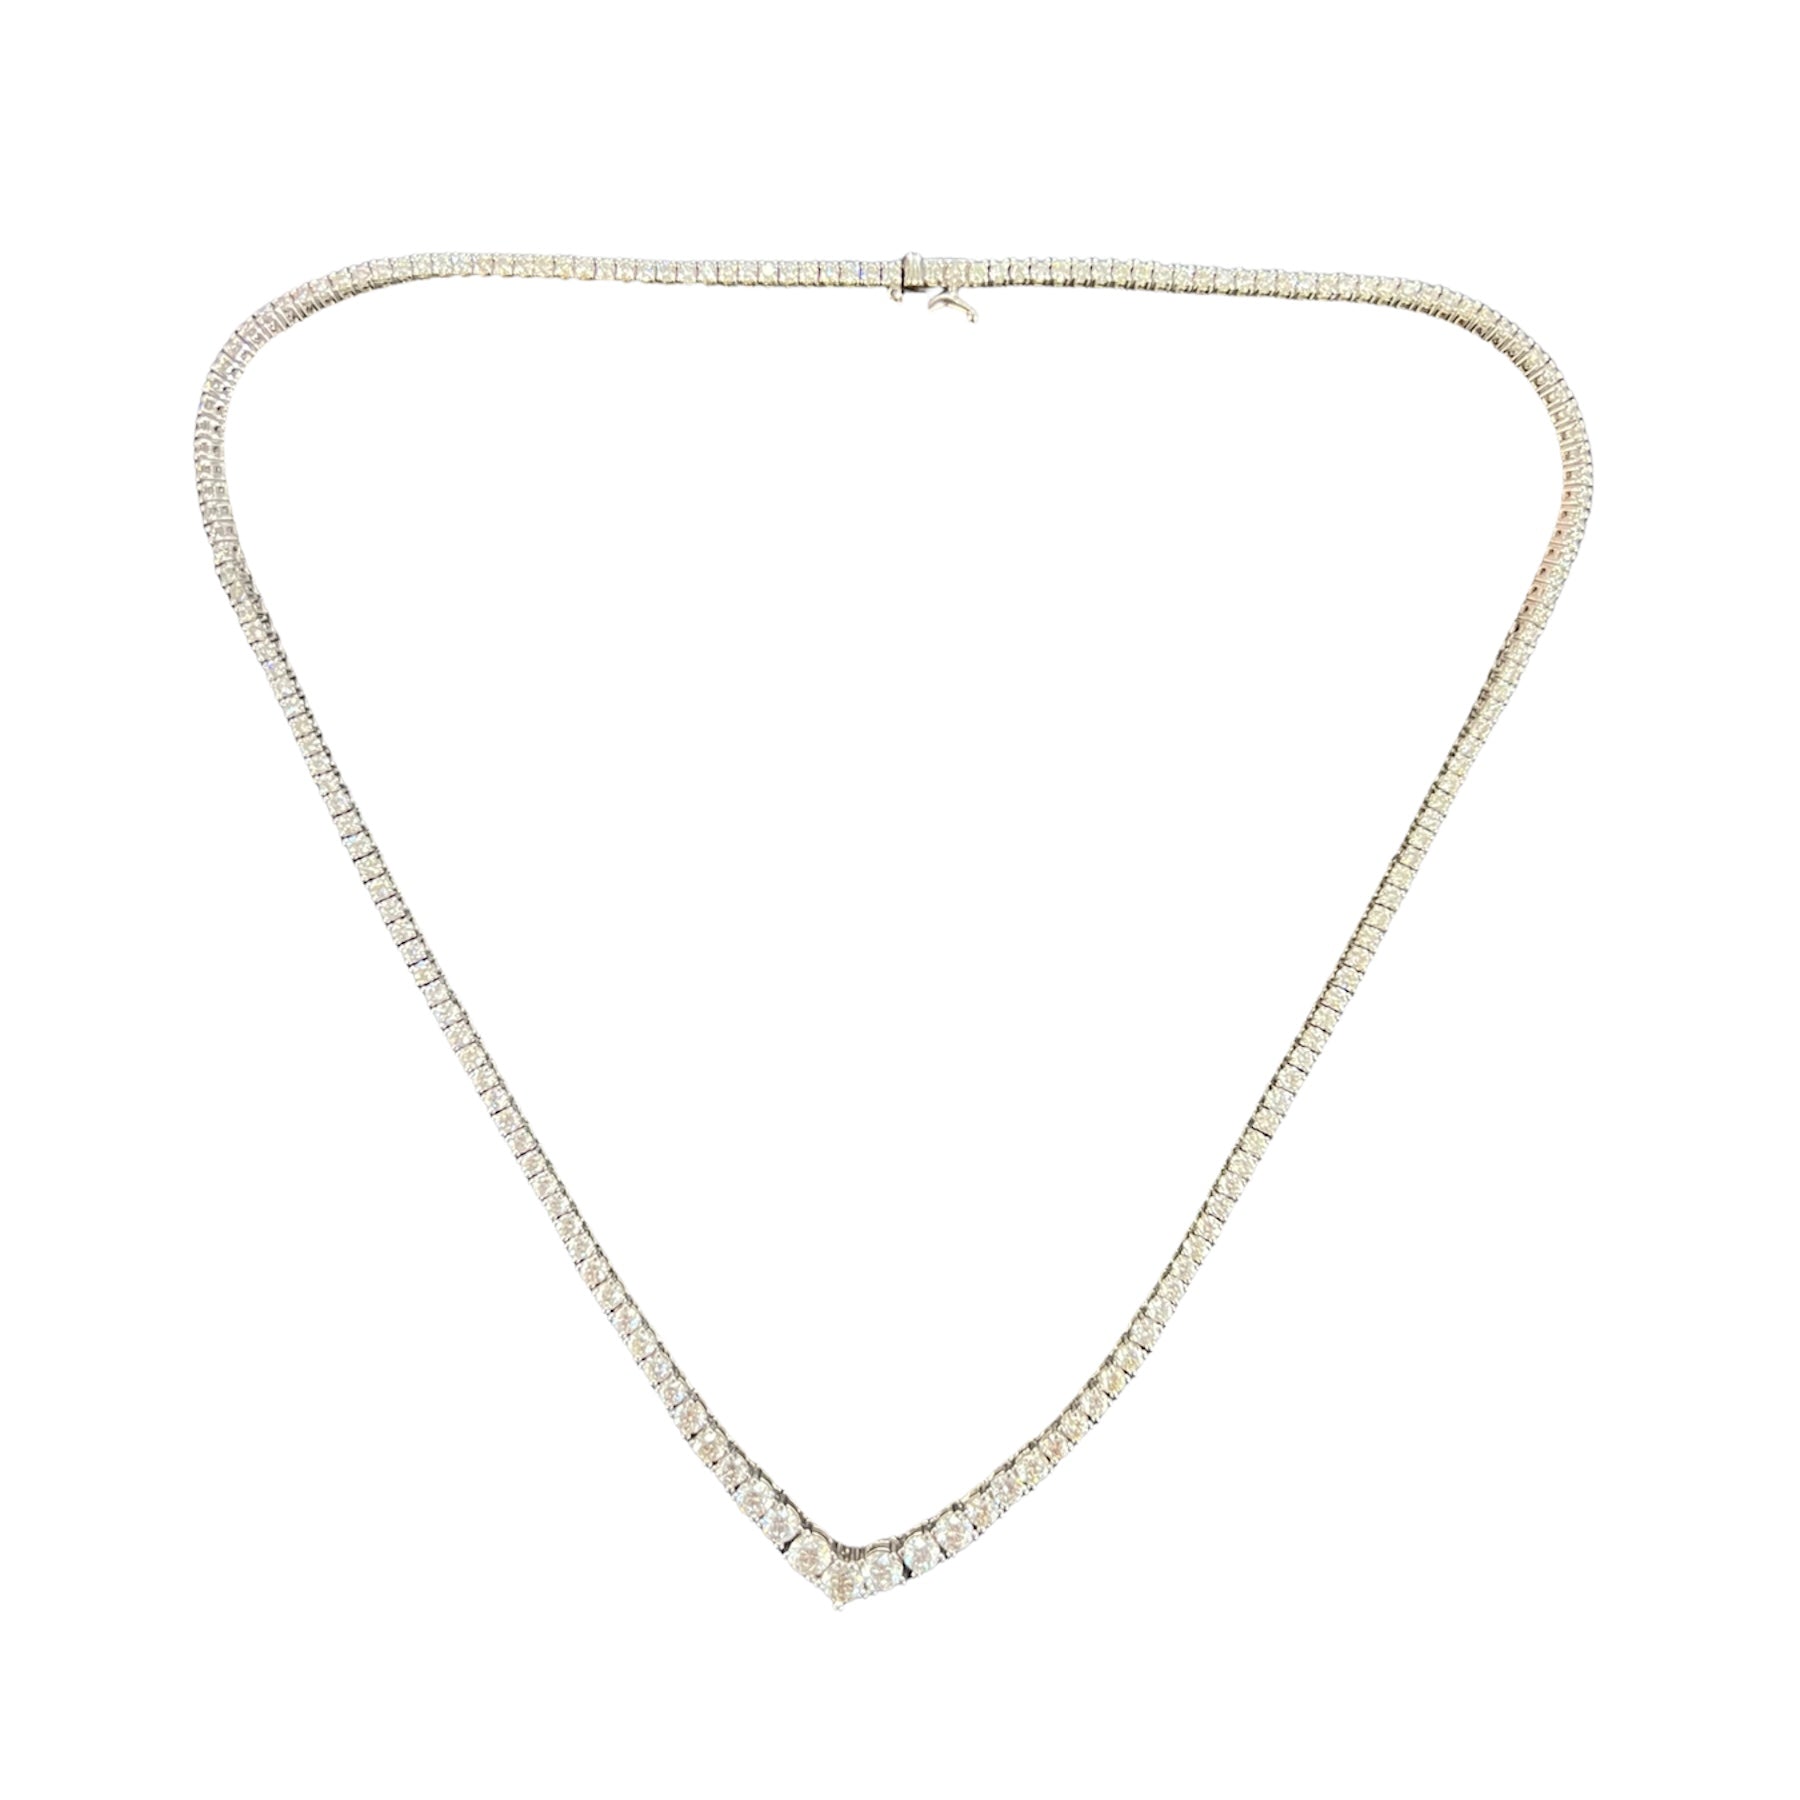 3.5CTW Diamond 14K White Gold Tennis Necklace 16”